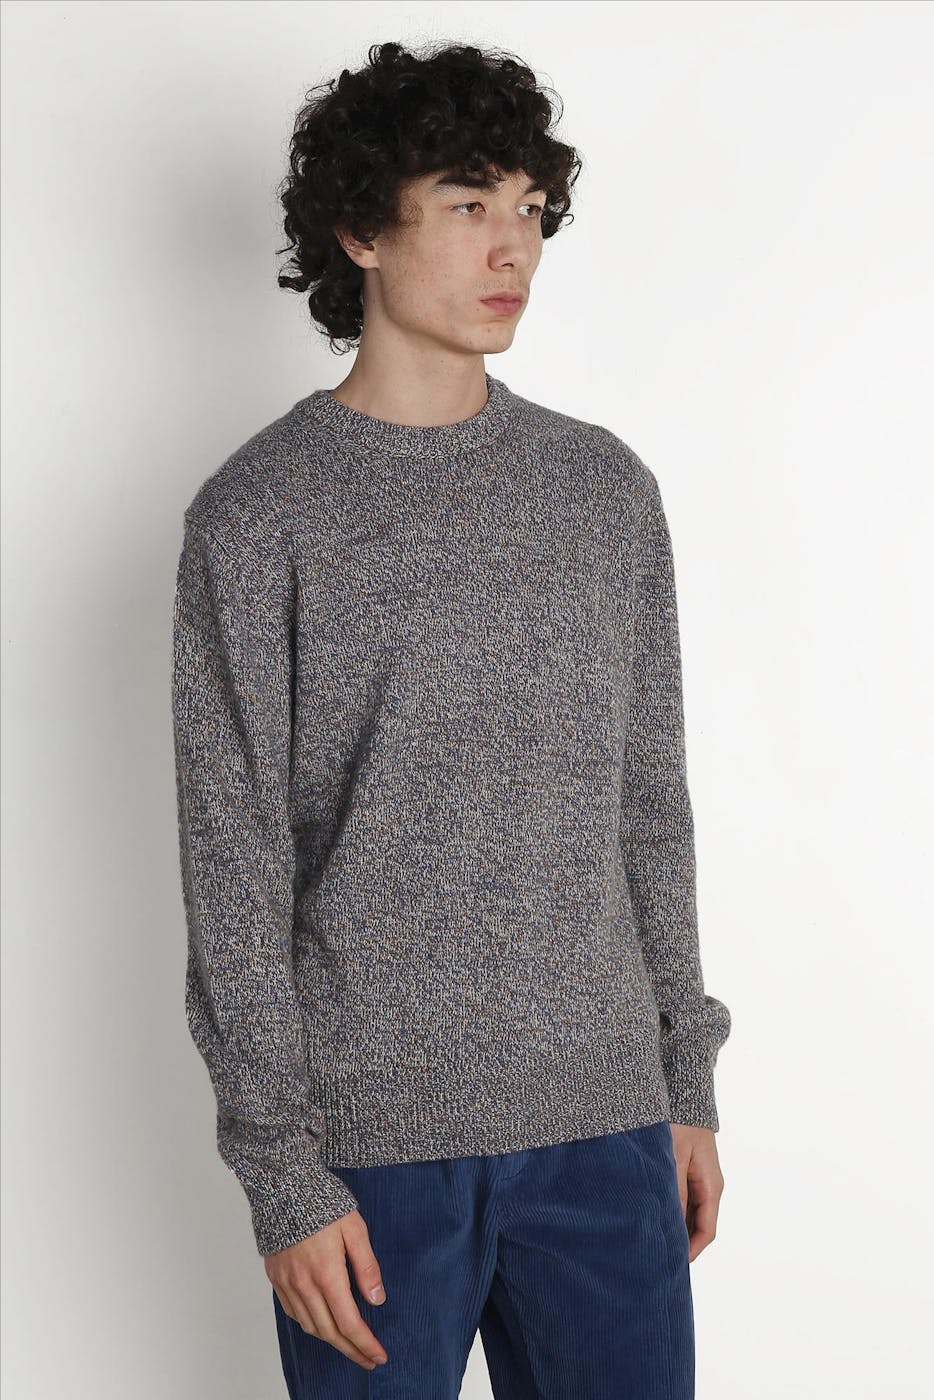 Antwrp - Lichtblauw-bruine Tweed trui